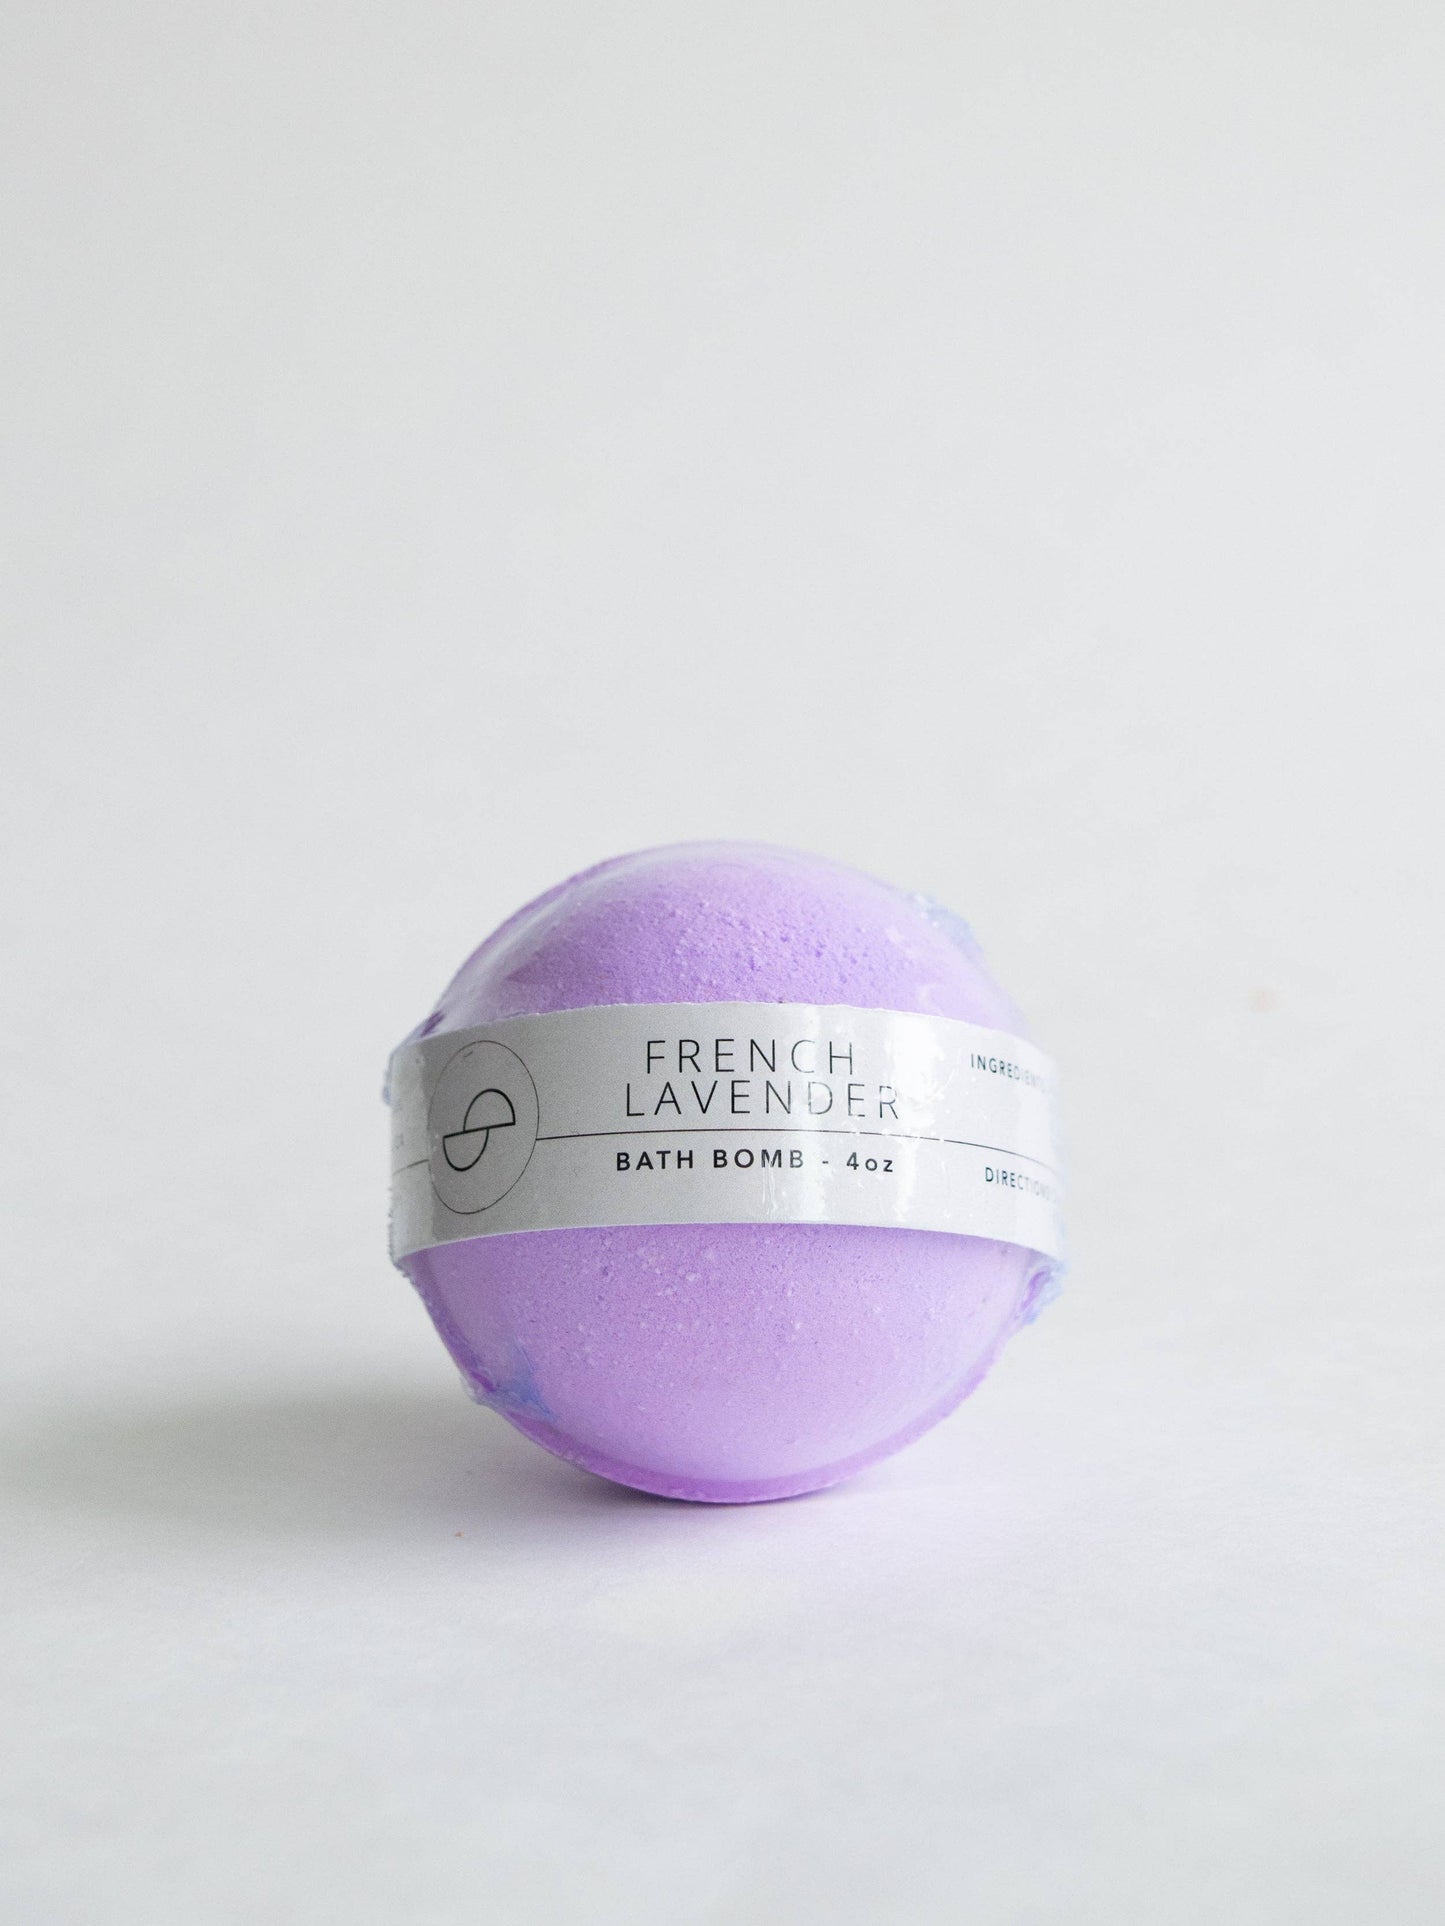 Lend Me Some Sugar Bath Company - French Lavender Bath Bomb